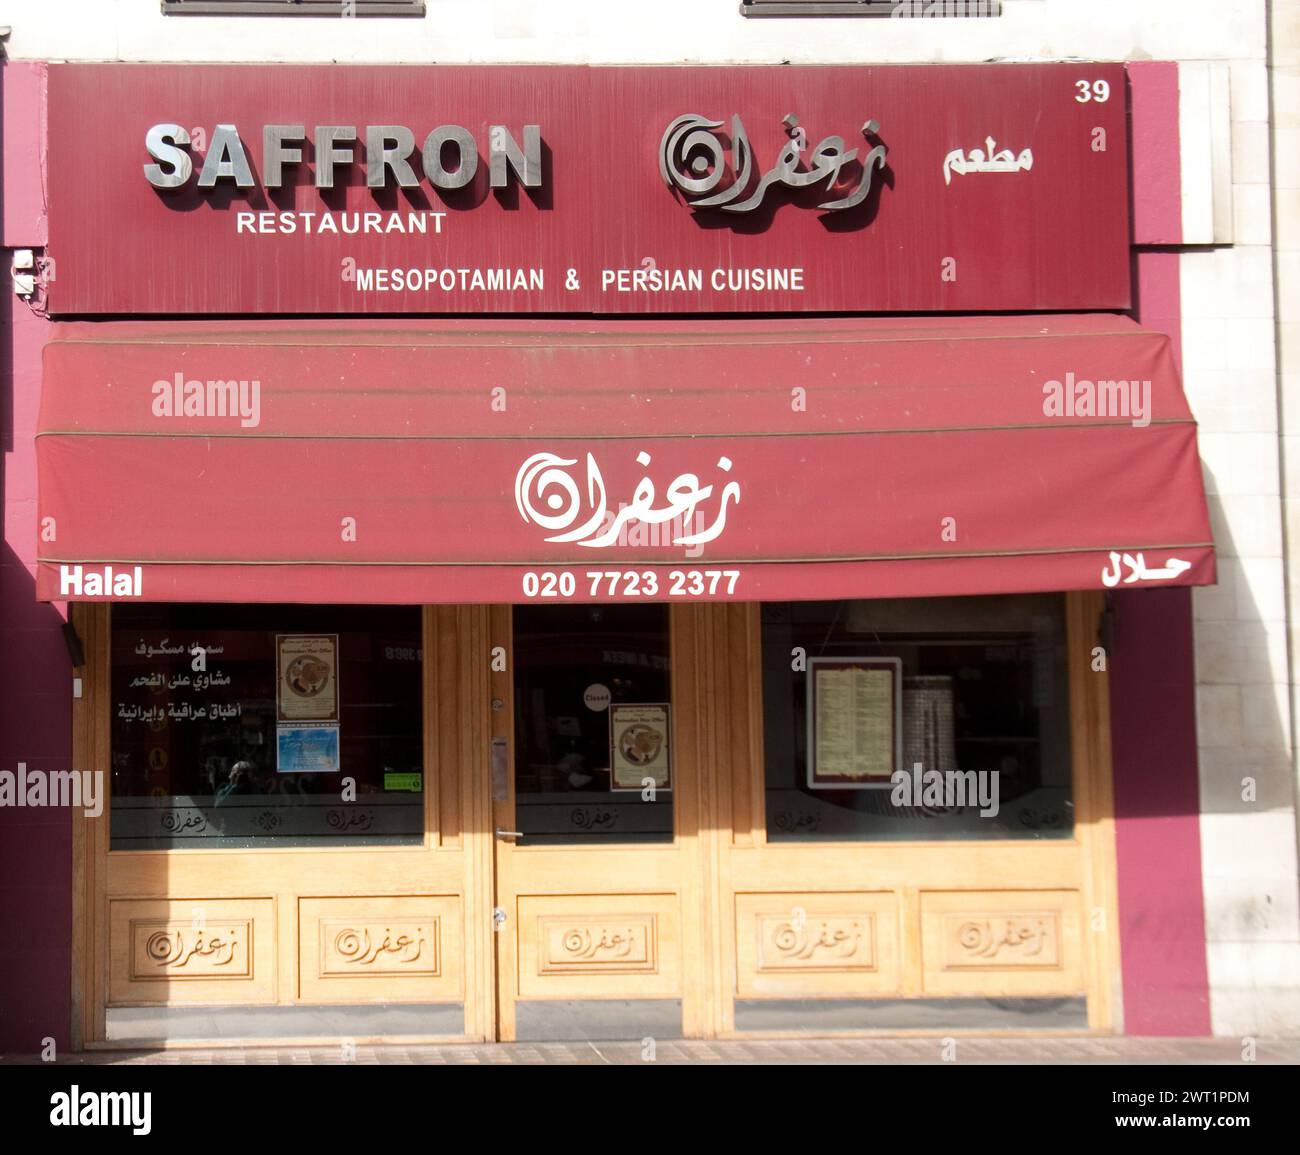 Saffron Restaurant - Mesopotamian and Persian Cuisine, Bayswater, London, UK Stock Photo